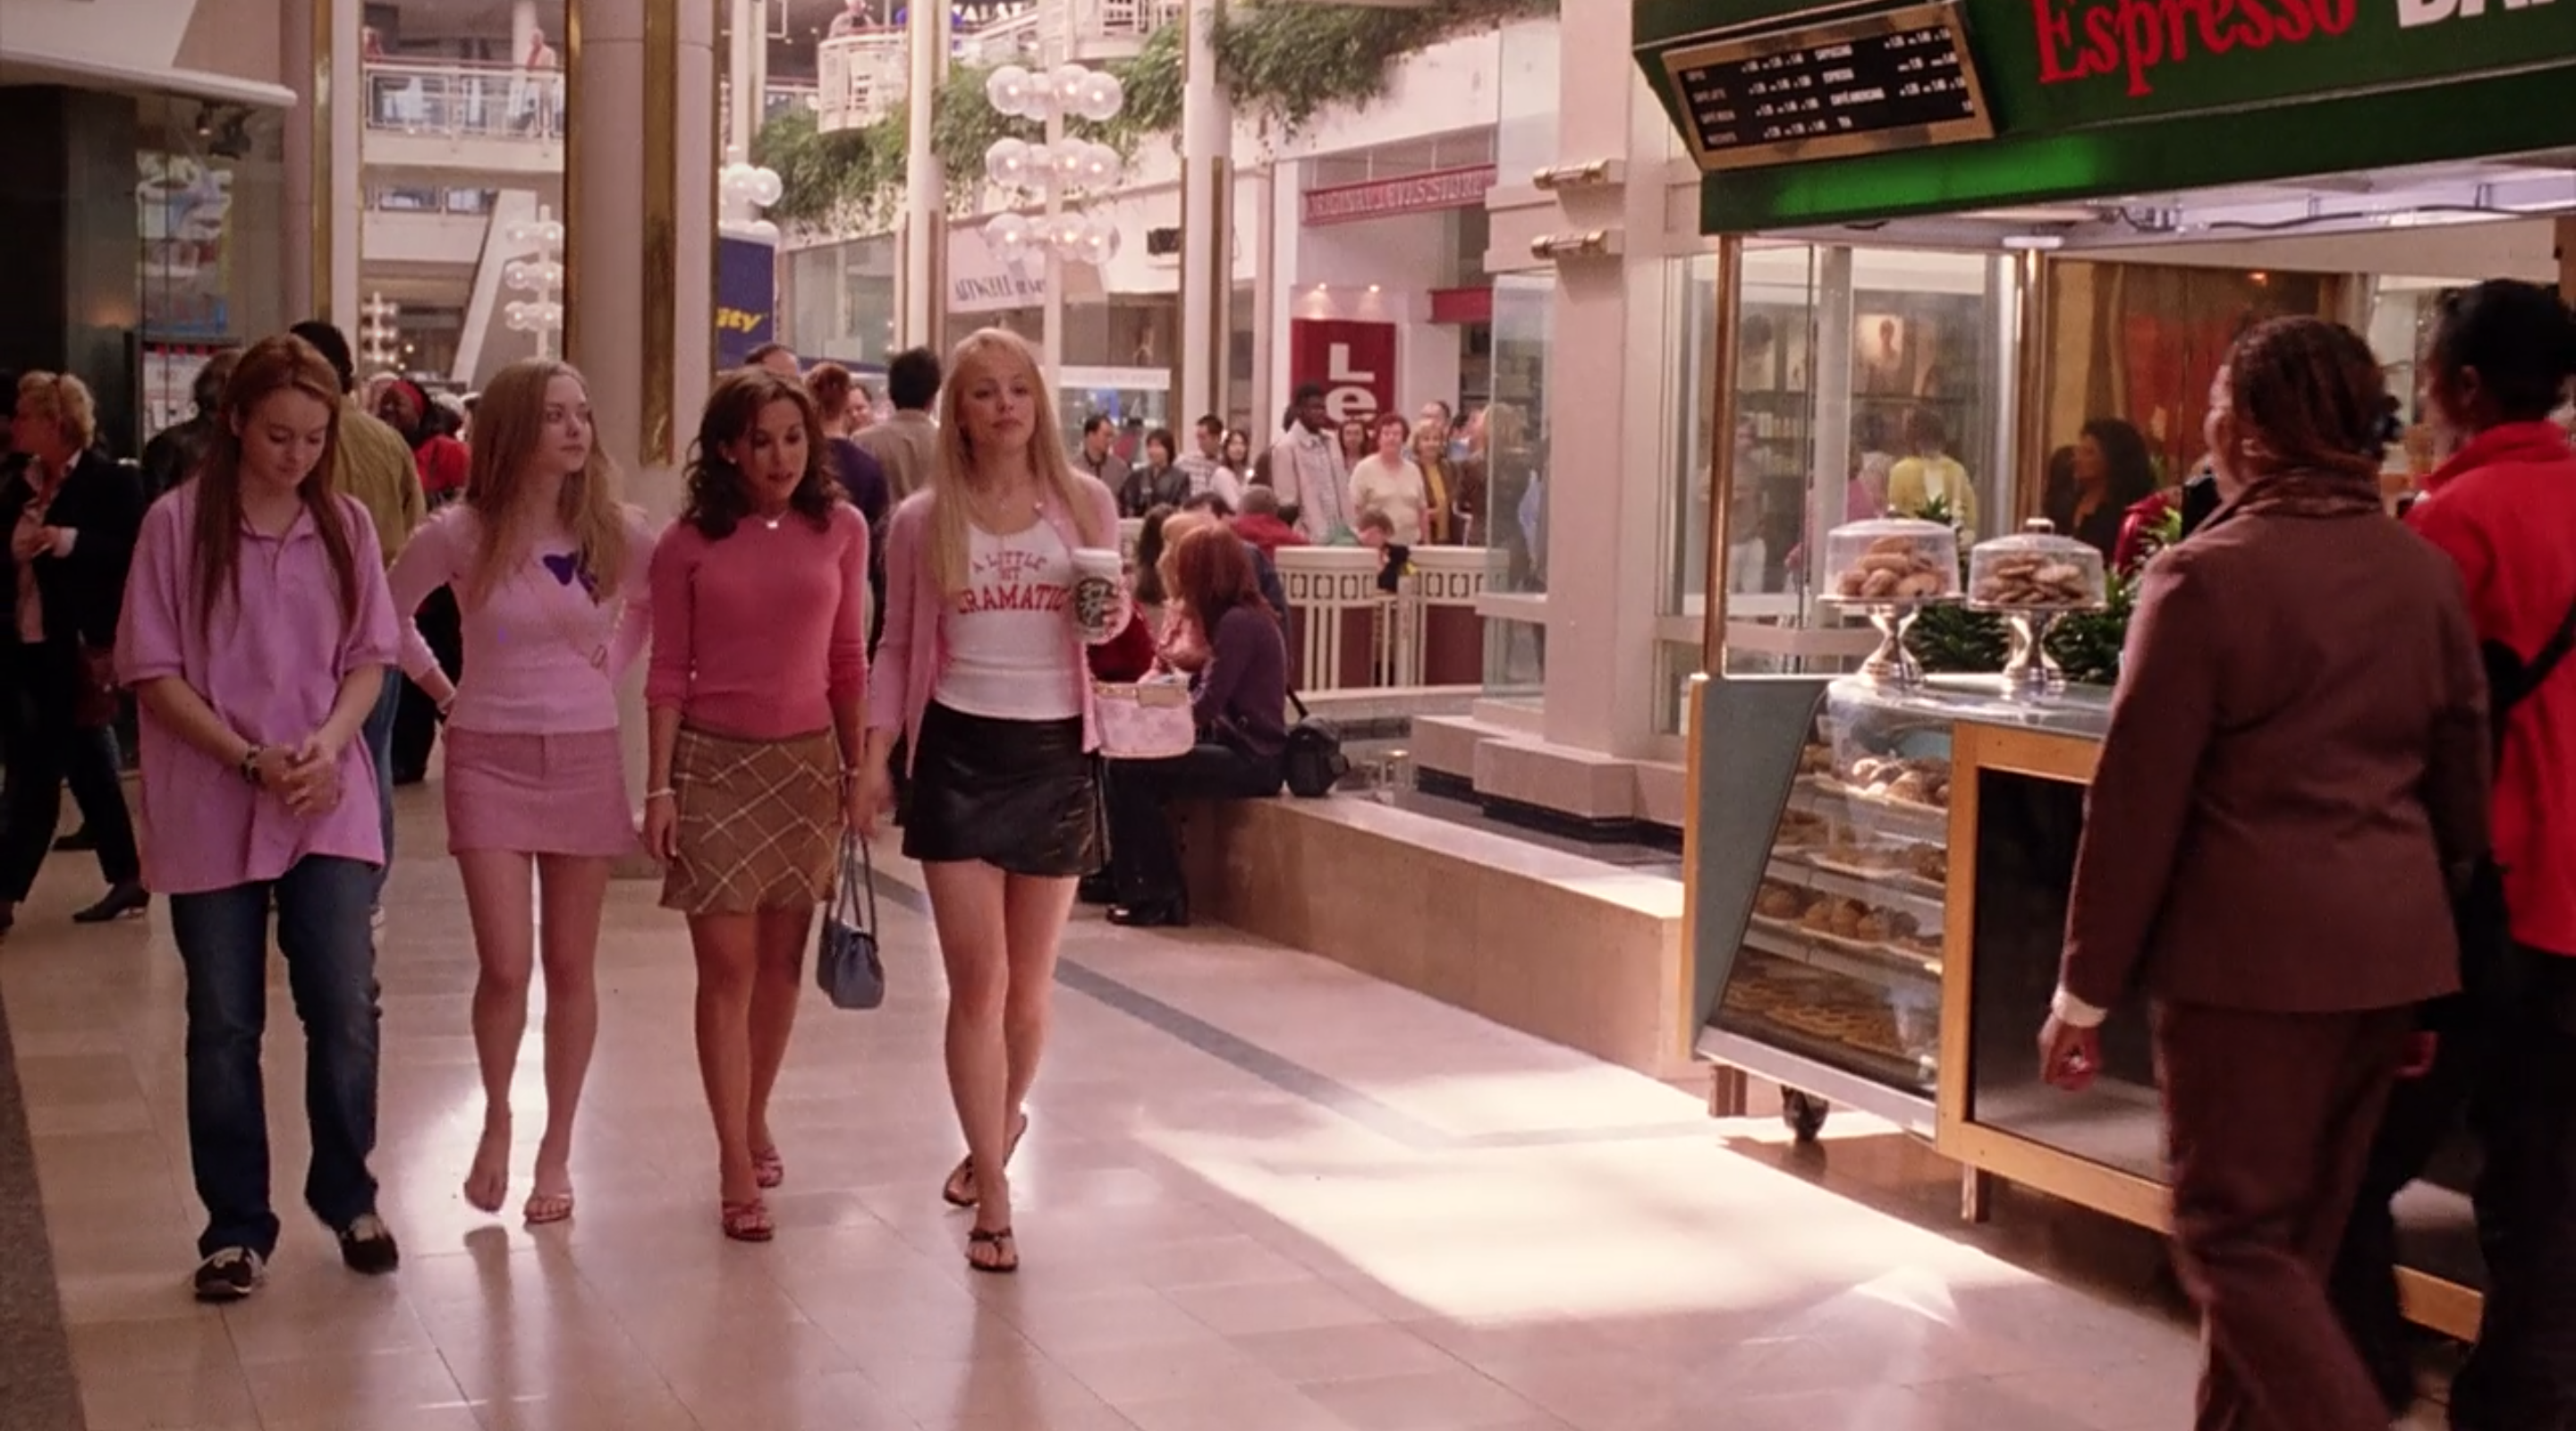 The Plastics walk through the mall.